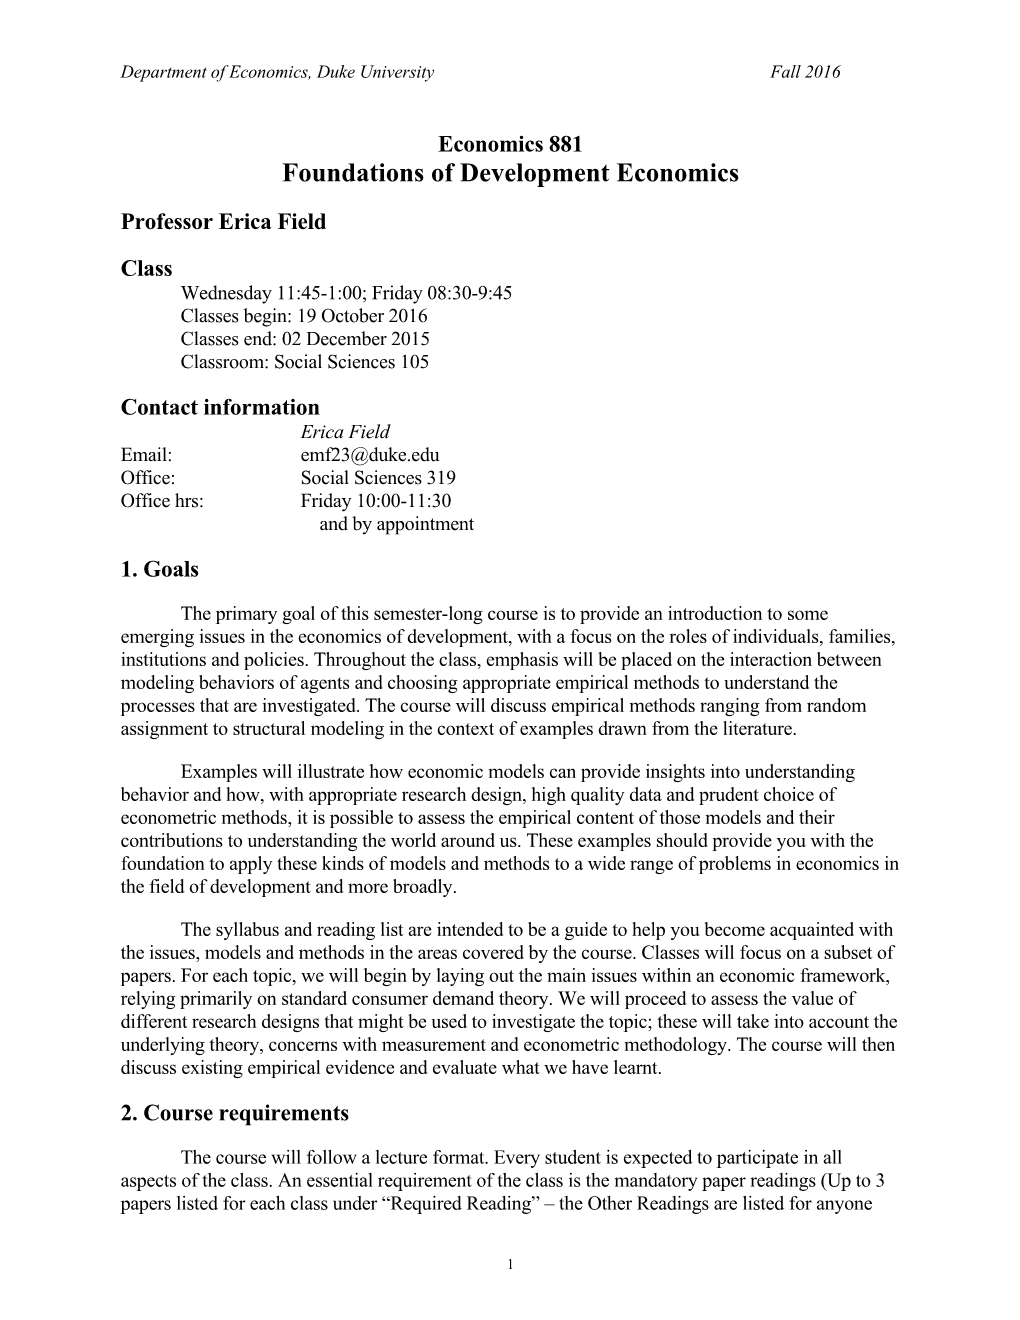 Foundations of Development Economics